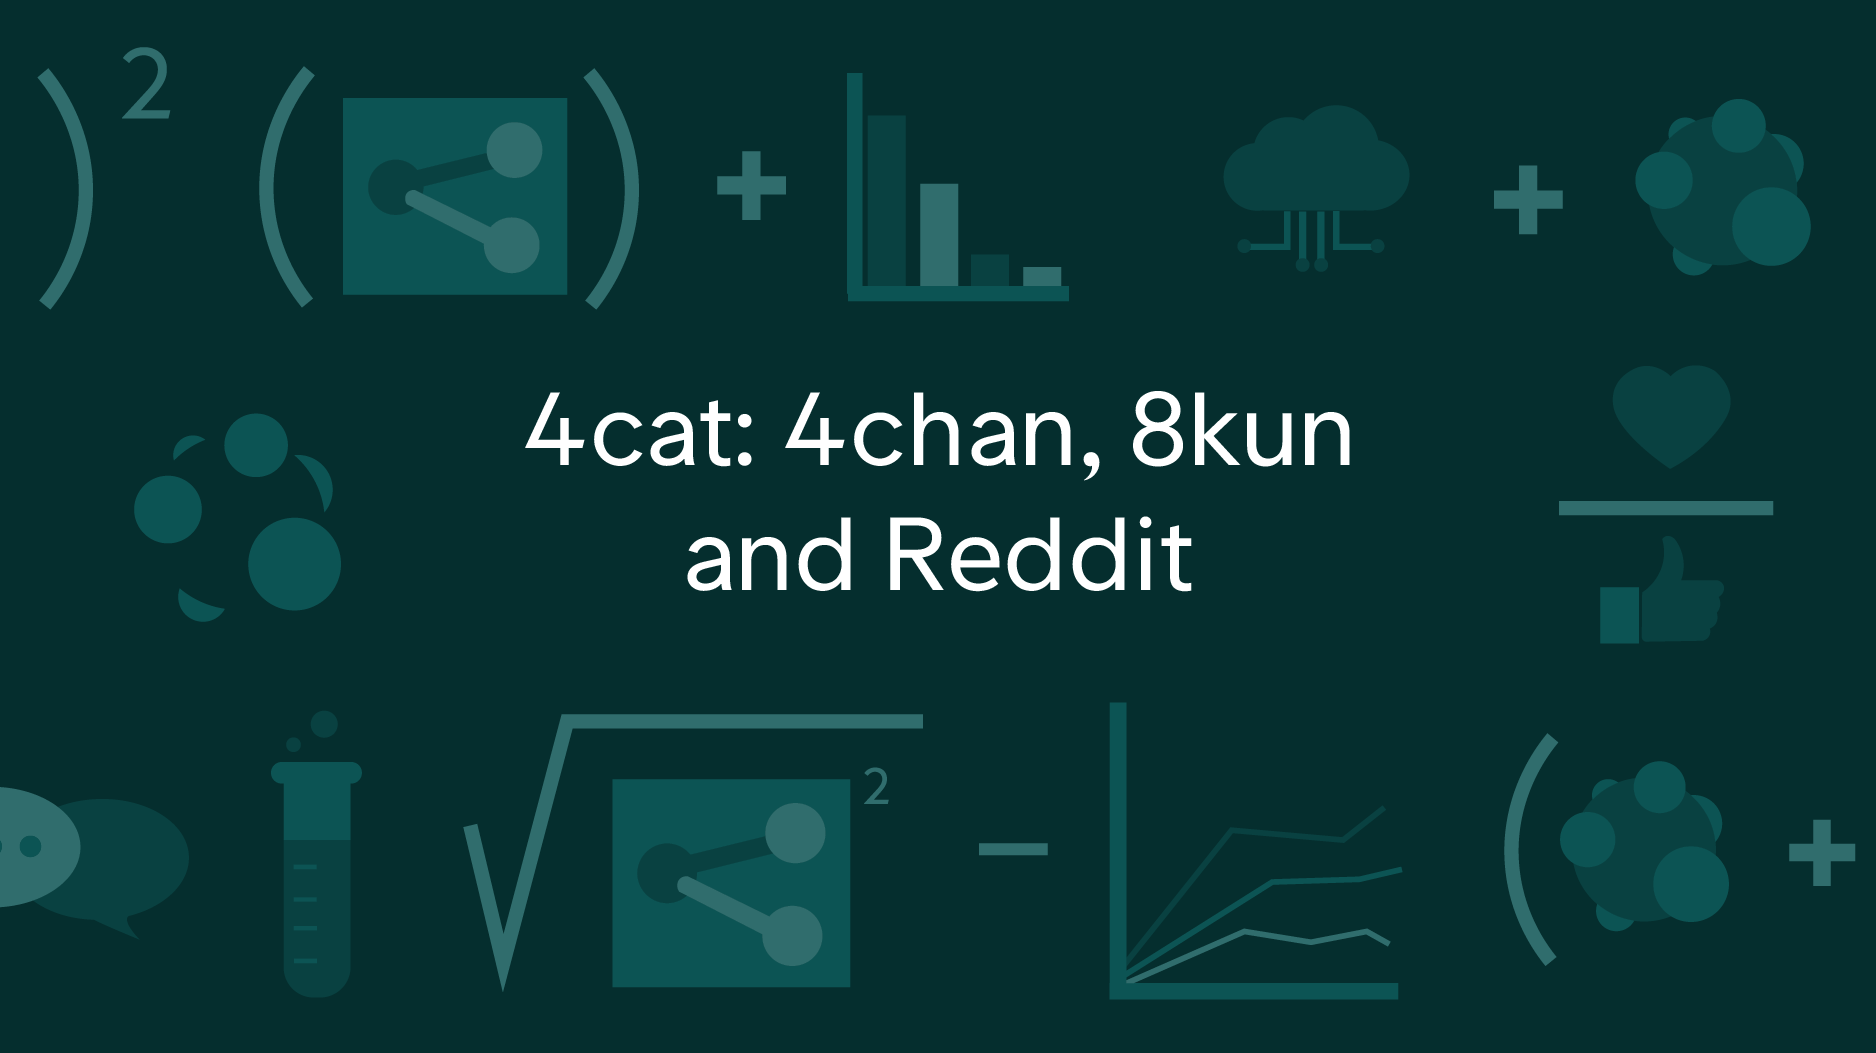 Track misinformation across platforms on 4chan, 8kun and Reddit